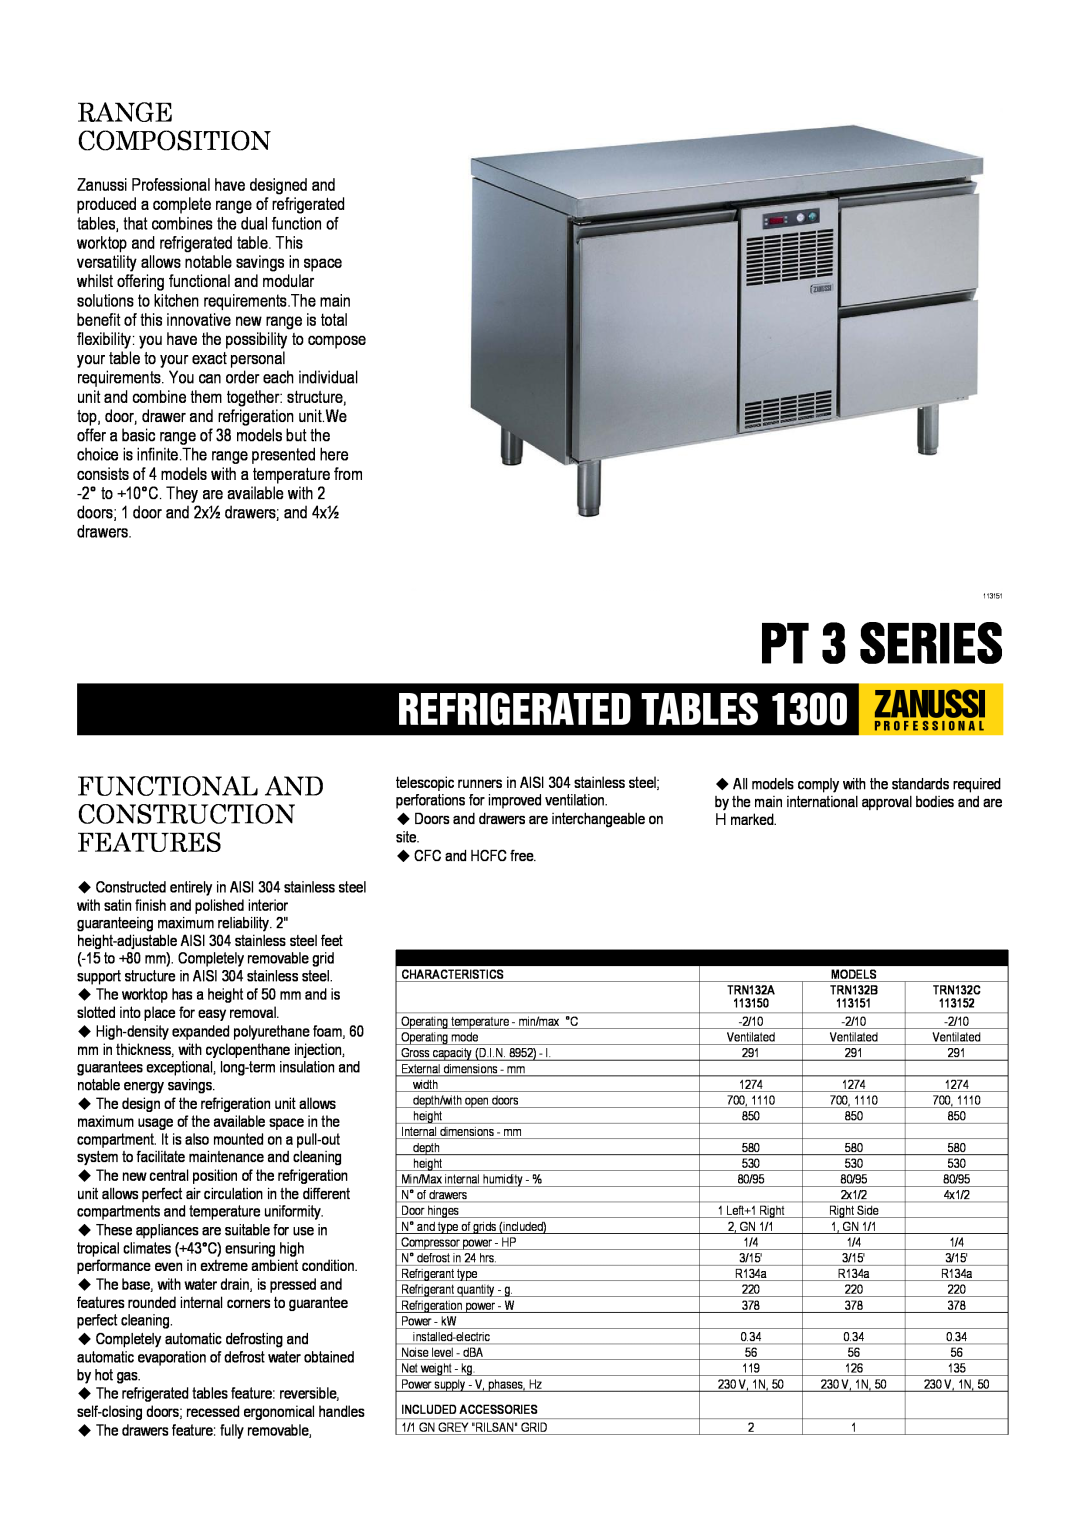 Zanussi 113152, 113150, 113151, TRN132B, TRN132C dimensions Zanussi, PT 3 SERIES, Refrigerated Tables, Range Composition 